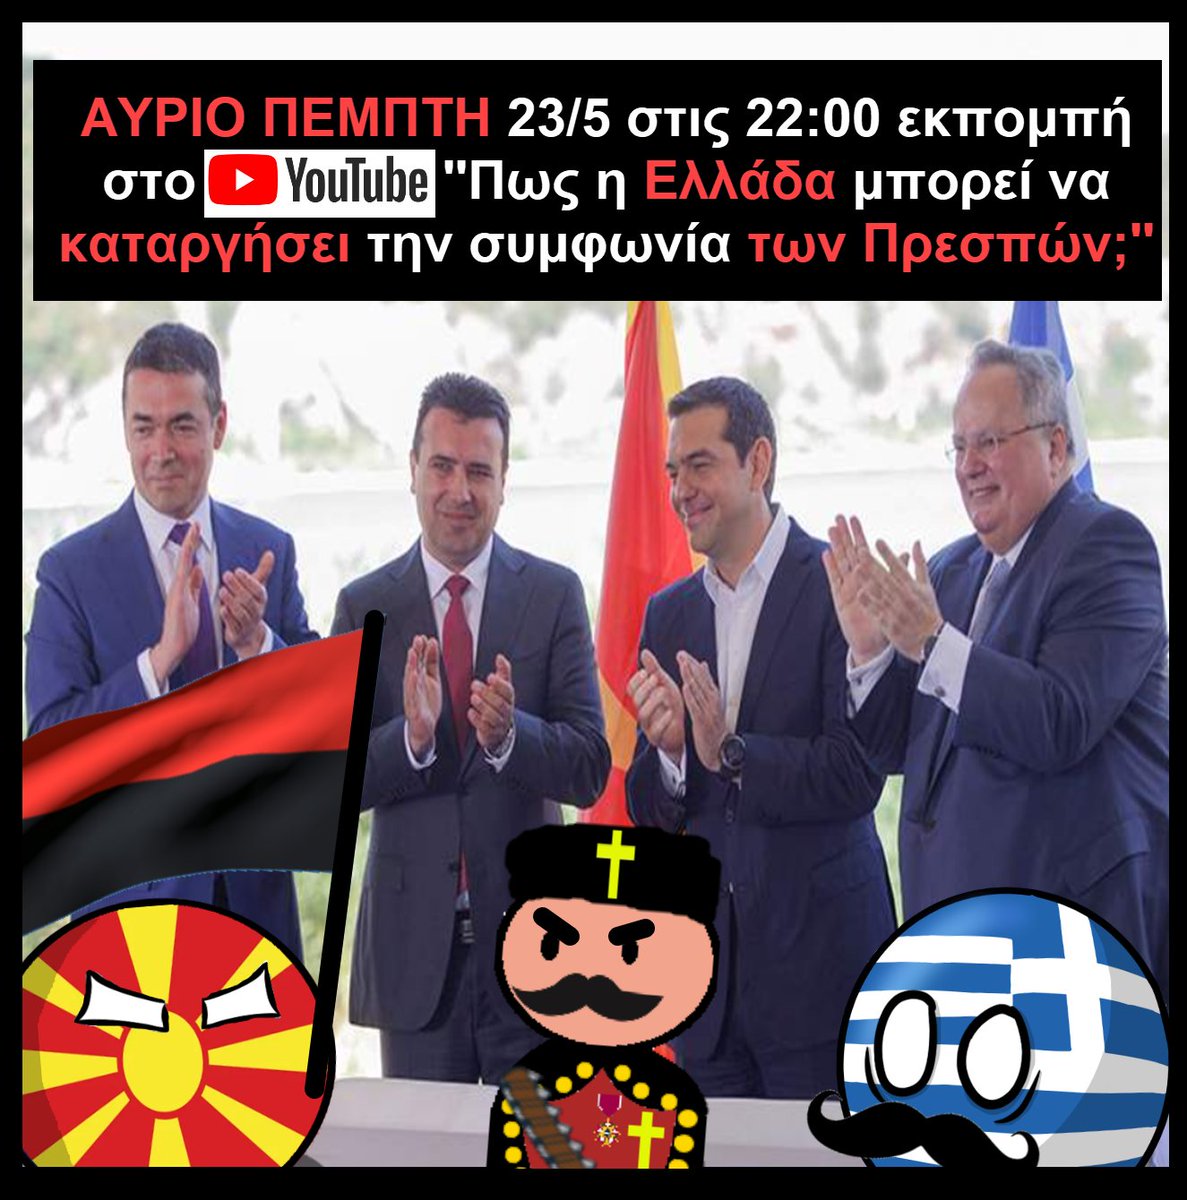 ‼️Ποιοι είναι οι 'Εθνικιστές' της Βαρντάρσκα που δεν επιθυμούν την συμφωνία των Πρεσπών; Πως η Ελλάδα έχει την καλύτερη ευκαιρία να καταργήσει μια συμφωνία, που αποτελεί προδοσία έναντι της ιστορίας; Υπάρχει τρόπος η συμφωνία να αξιοποιηθεί υπέρ της Ελλάδος; Τα λέμε αύριο το…